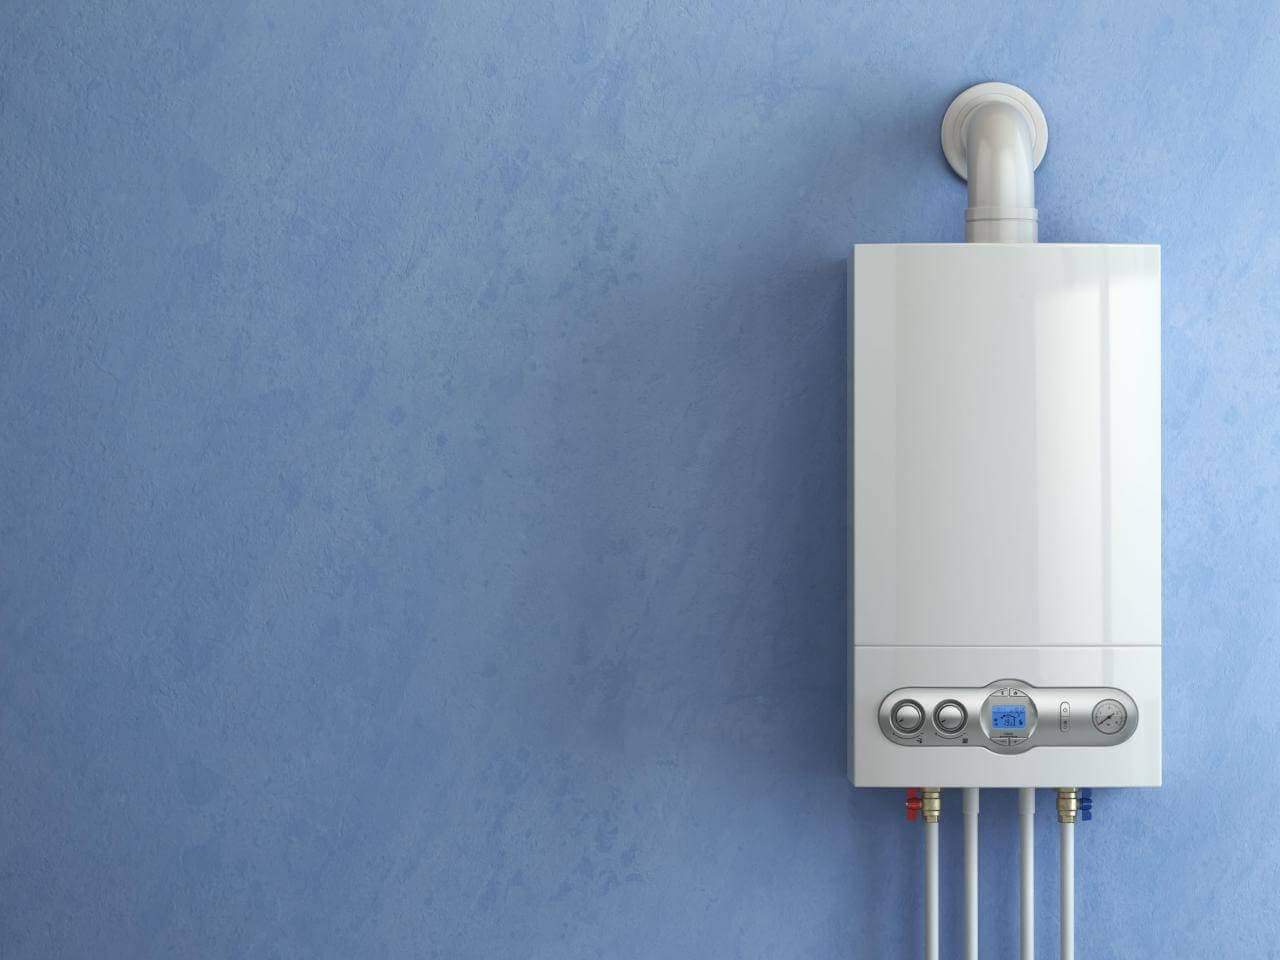 Calentadores de agua: Eléctricos o a Gas, ¿Cuál es mejor? - Comercial  Ginatta